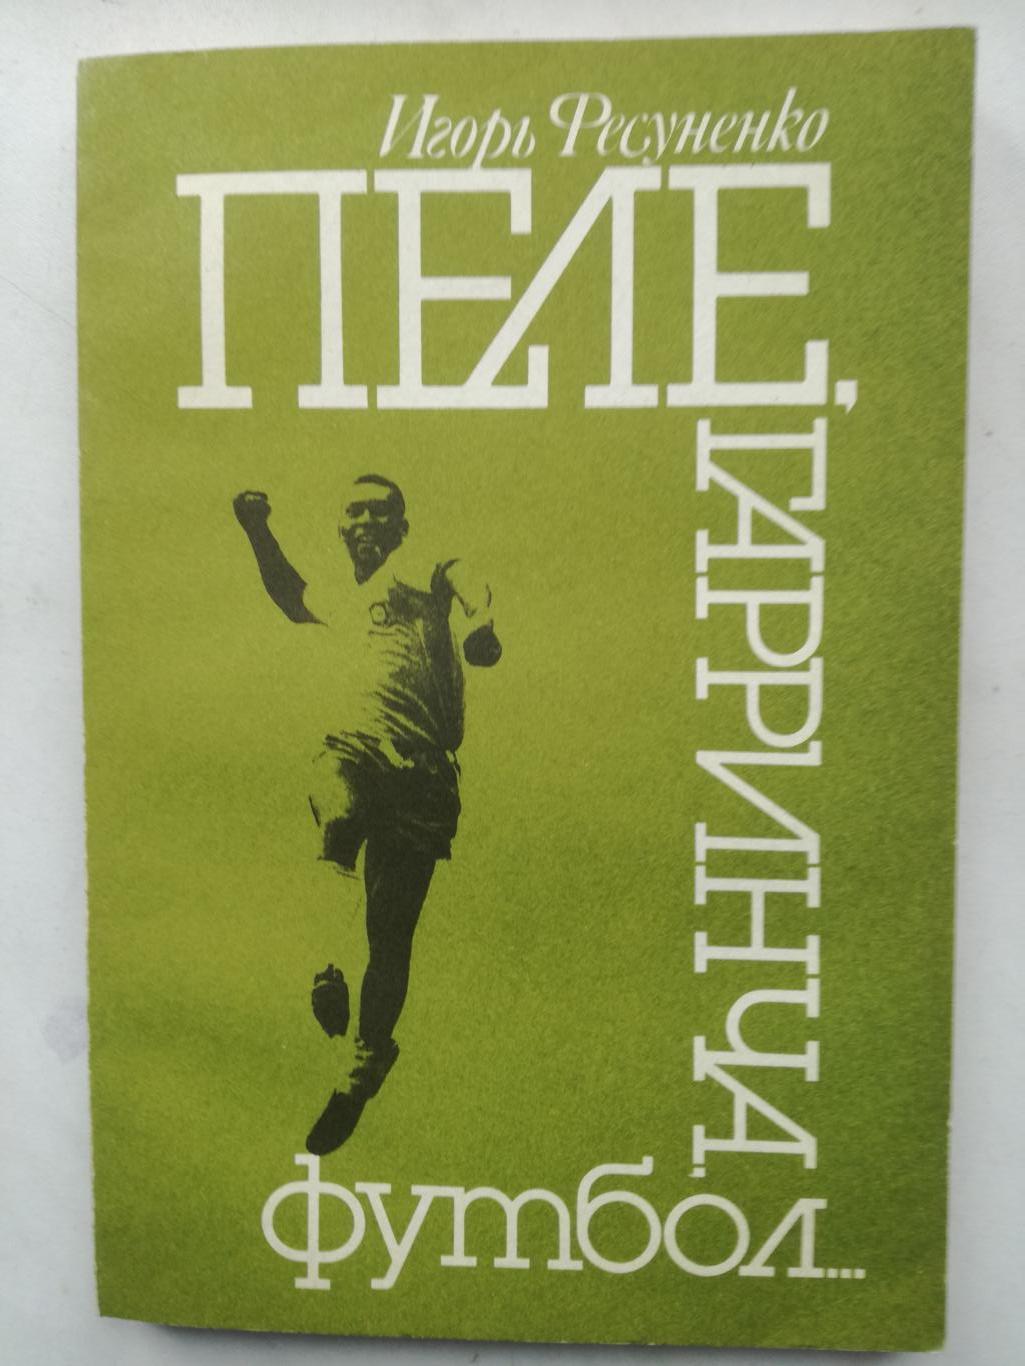 Игорь Фесуненко Пеле Гарринча футбол (3-е изд.), 1990